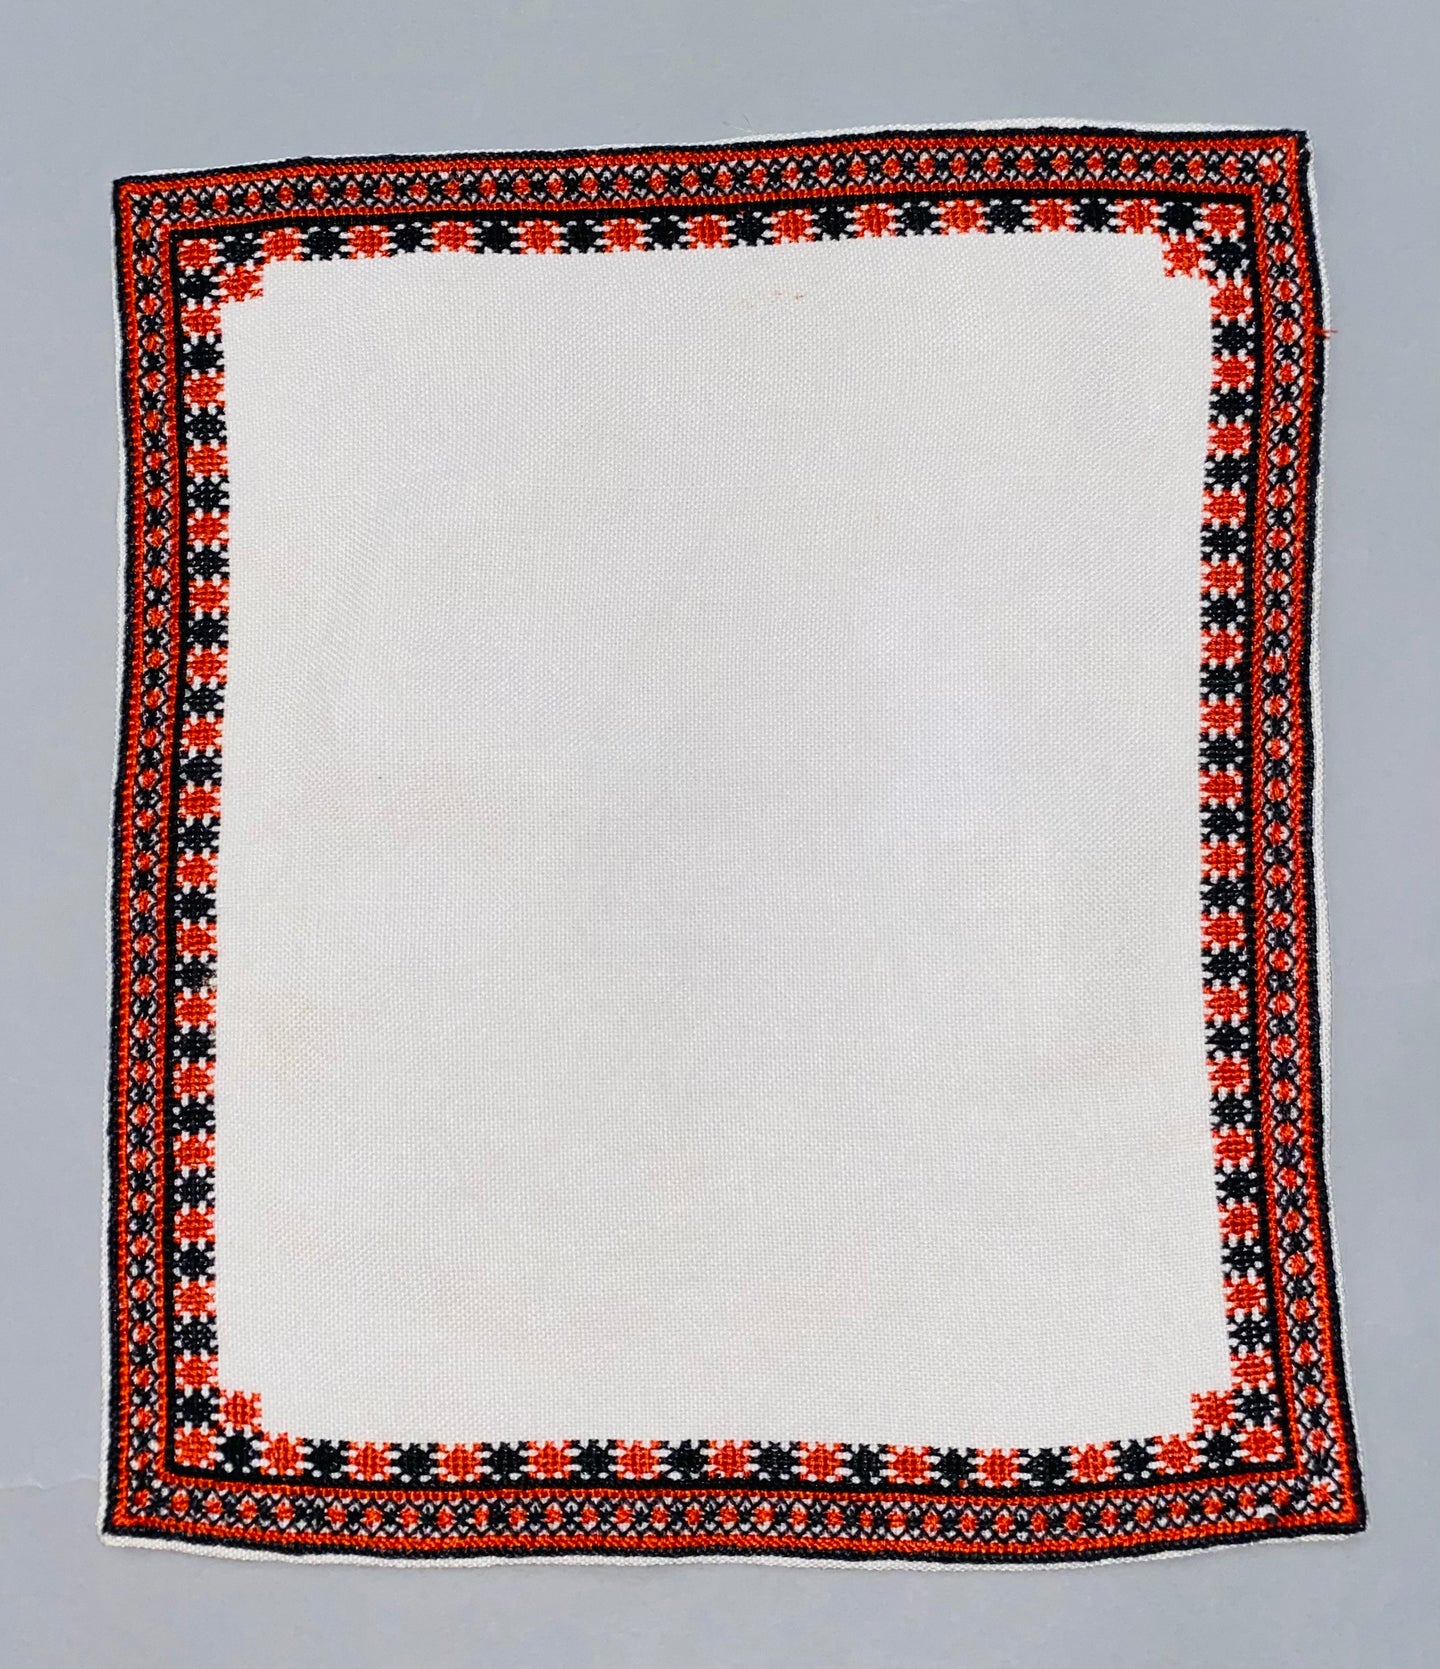 Embroidered  Vintage Servetka with orange, black embroidery  10